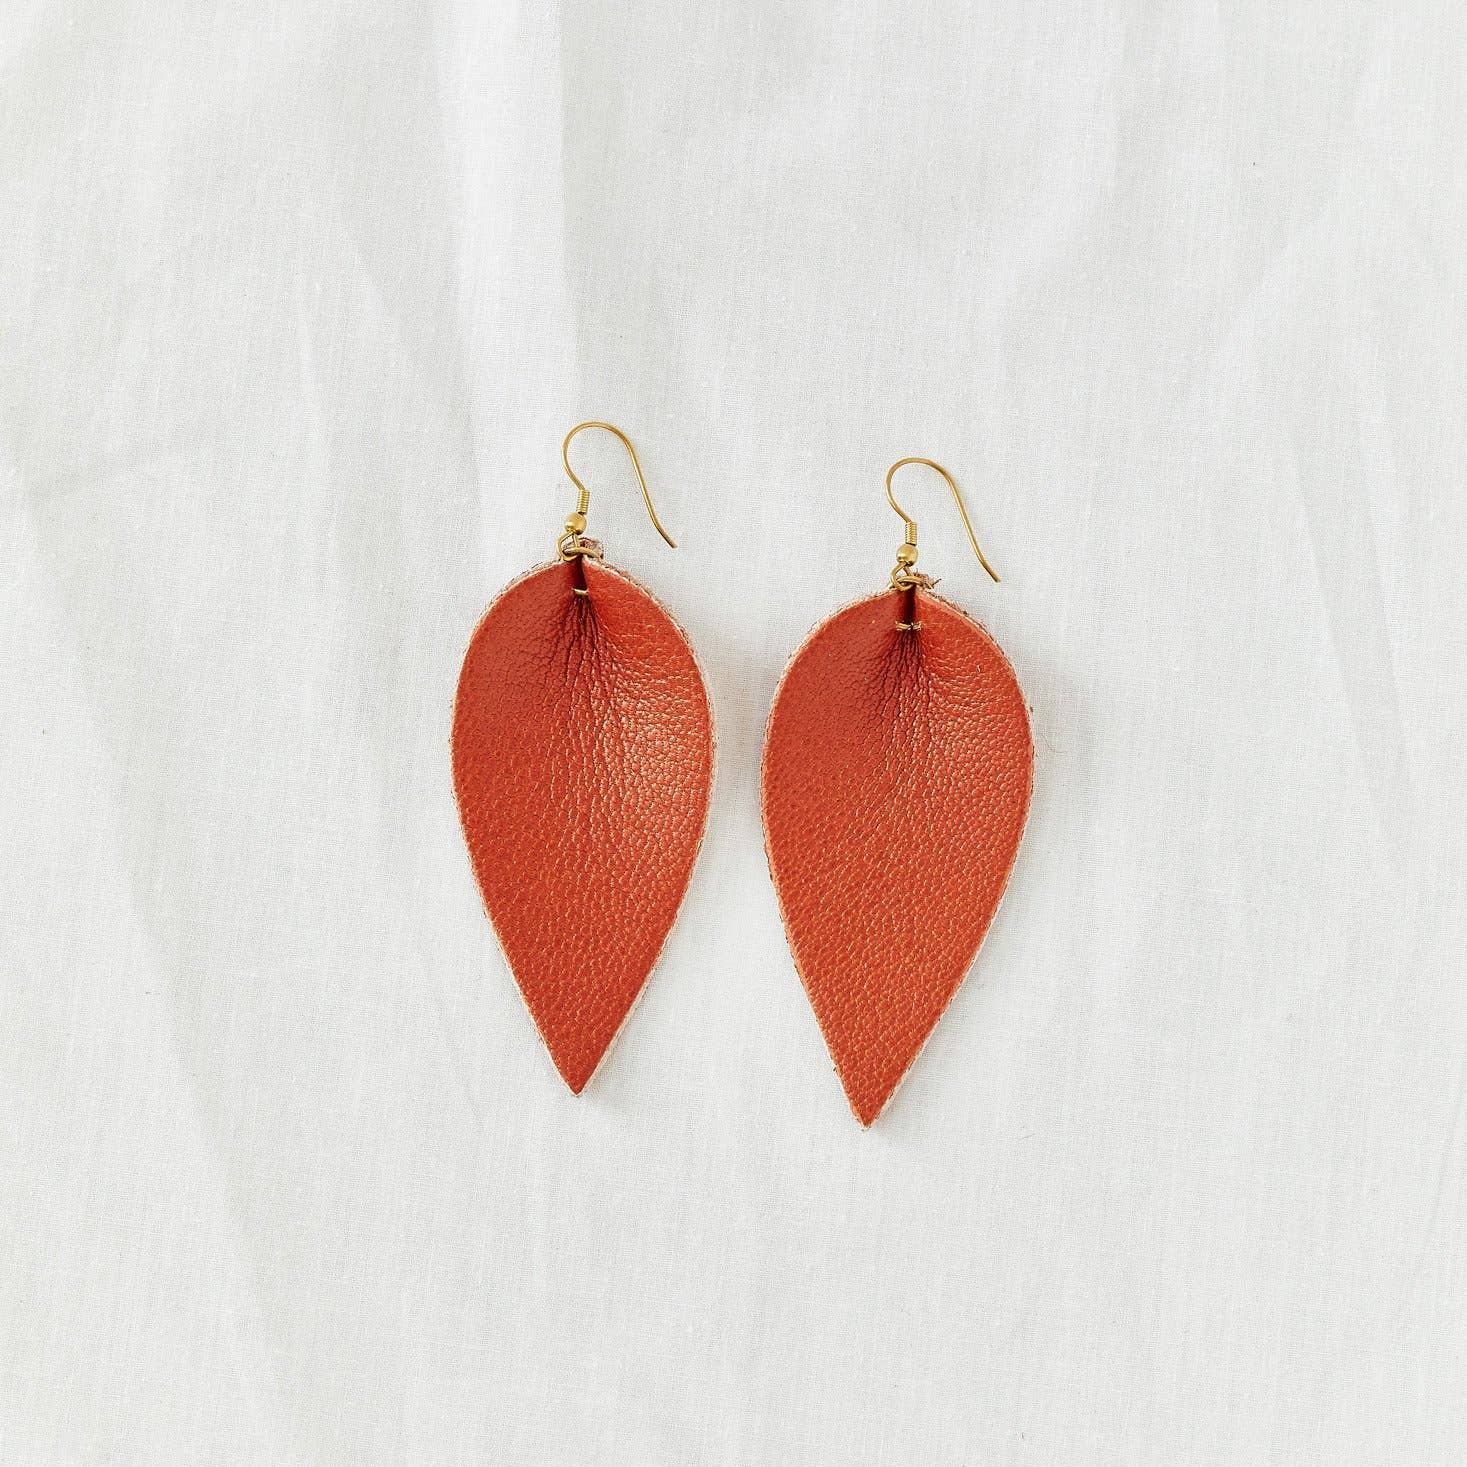 Pair of blood orange leather earrings in the shape of an upside-down teardrop in front of a white backdrop